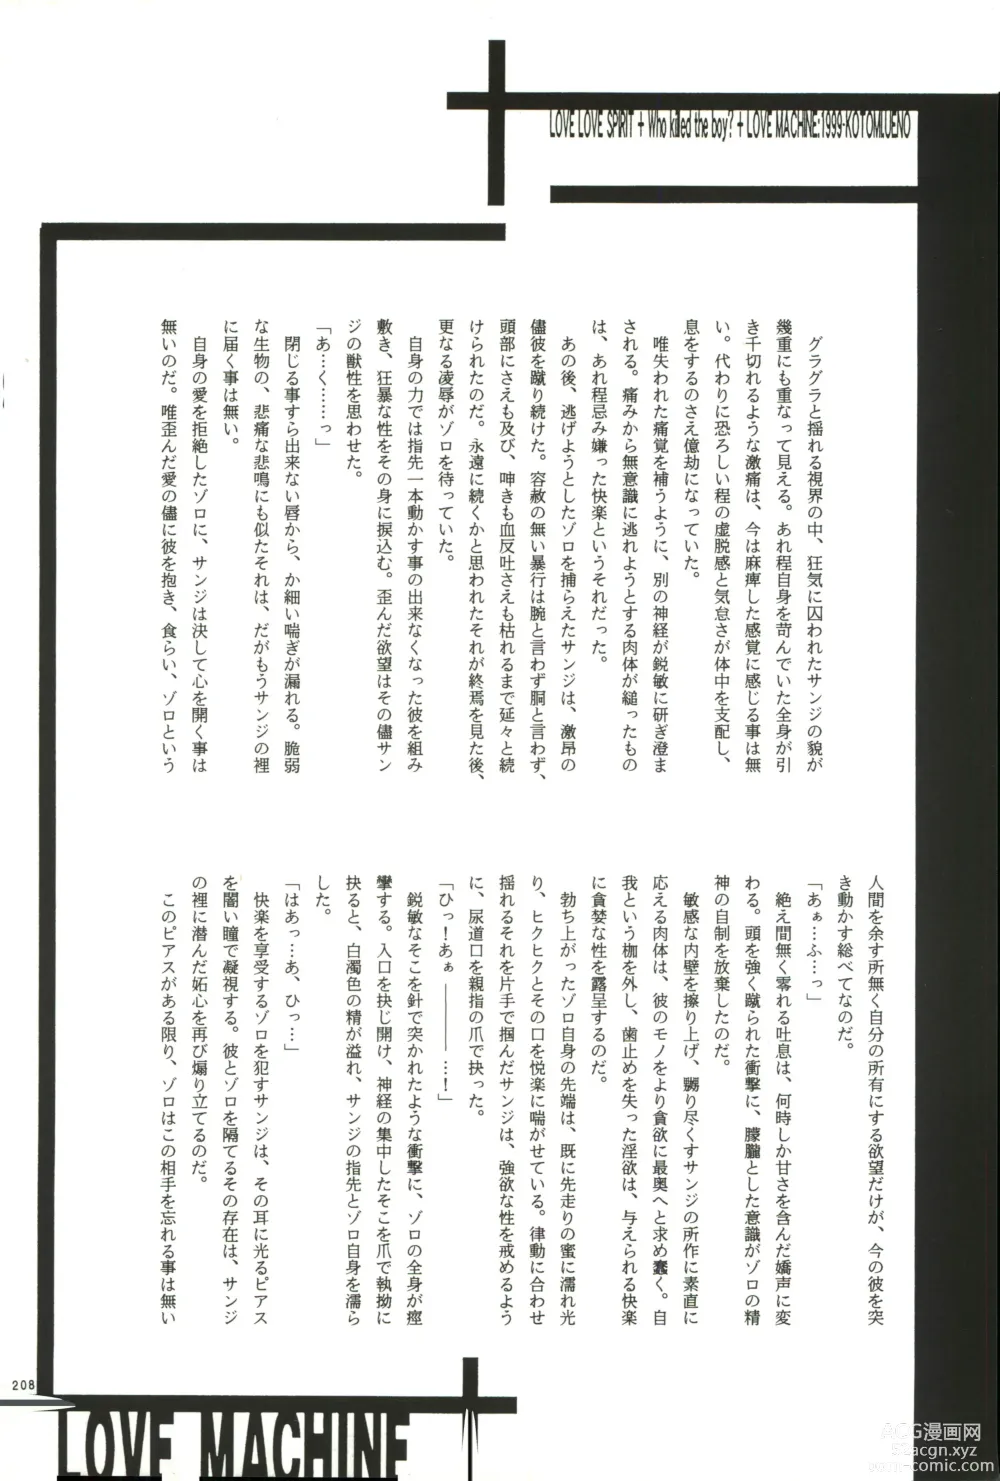 Page 207 of doujinshi FLASH BACK